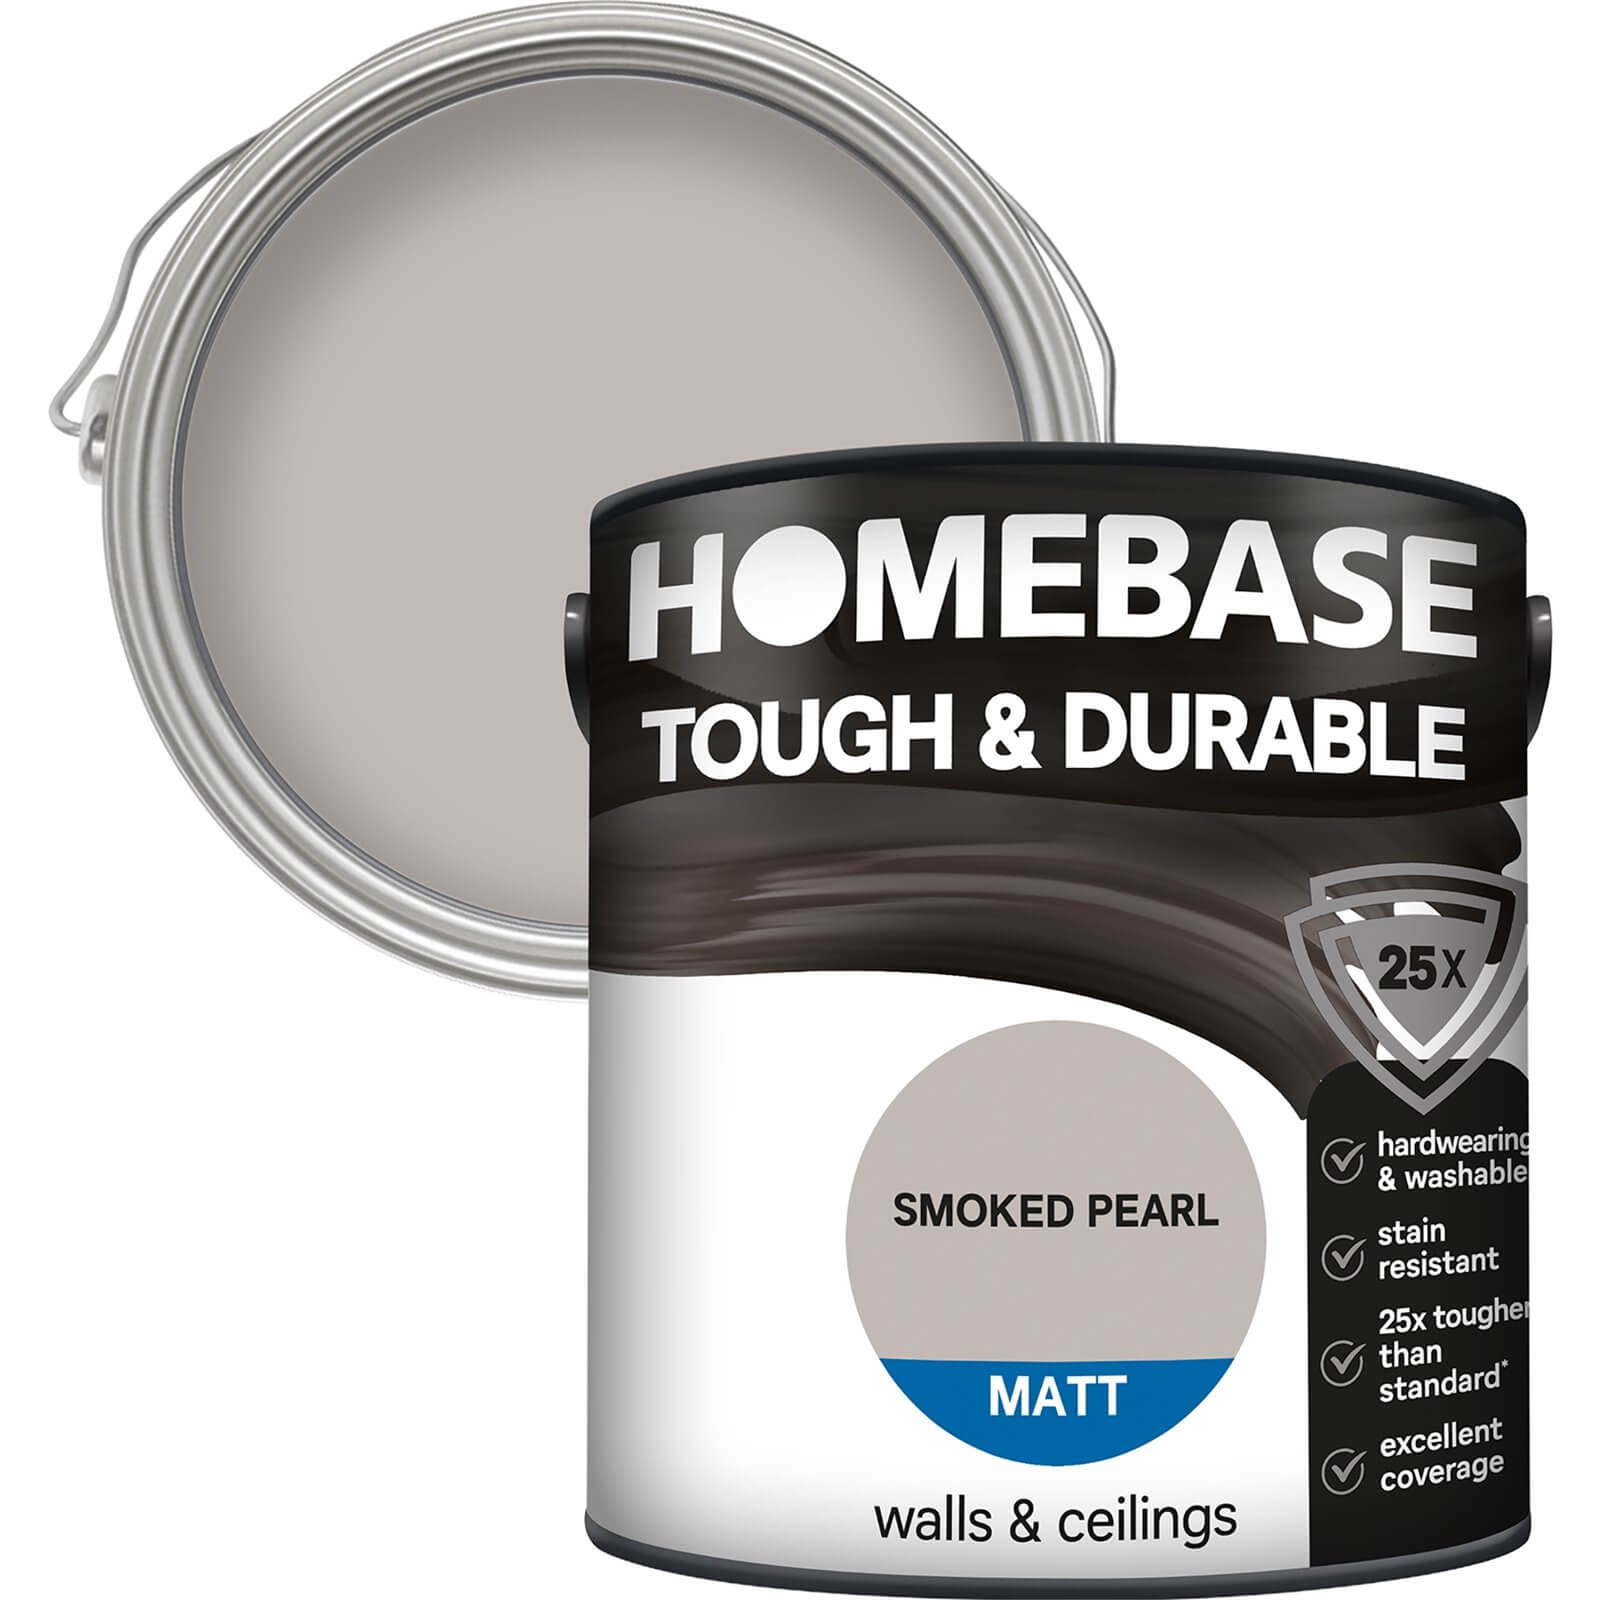 Homebase Tough & Durable Matt Paint Smoked Pearl - 2.5L